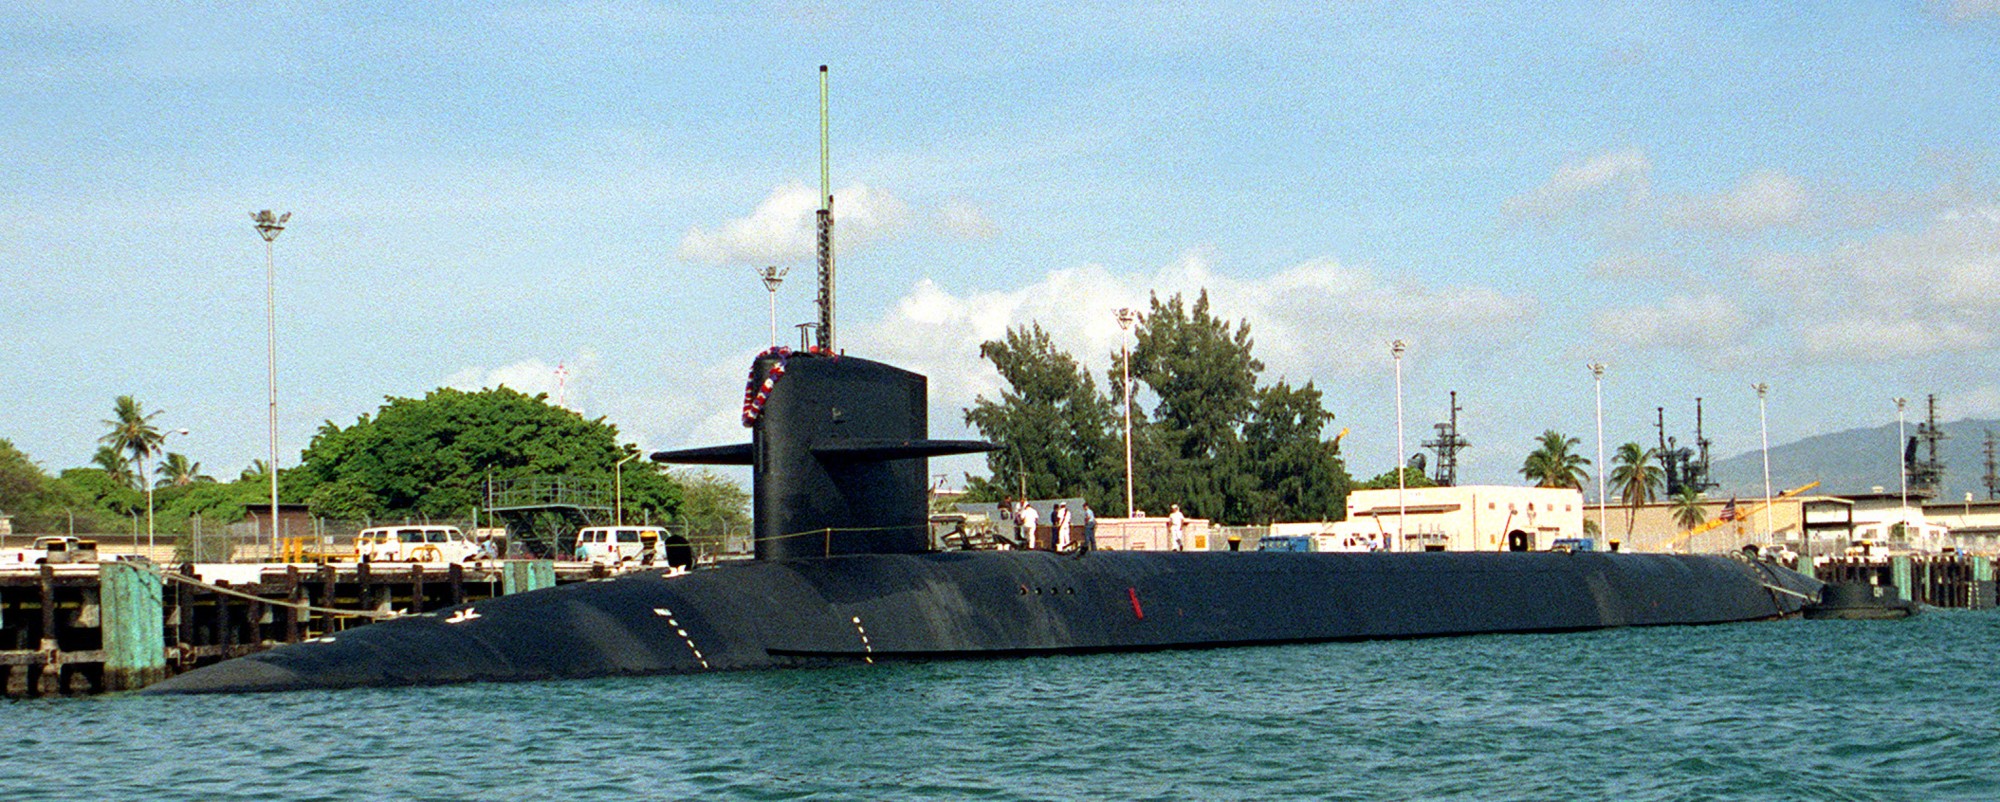 ssbn-730 uss henry m. jackson ohio class ballistic missile submarine 1989 31 pearl harbor hawaii